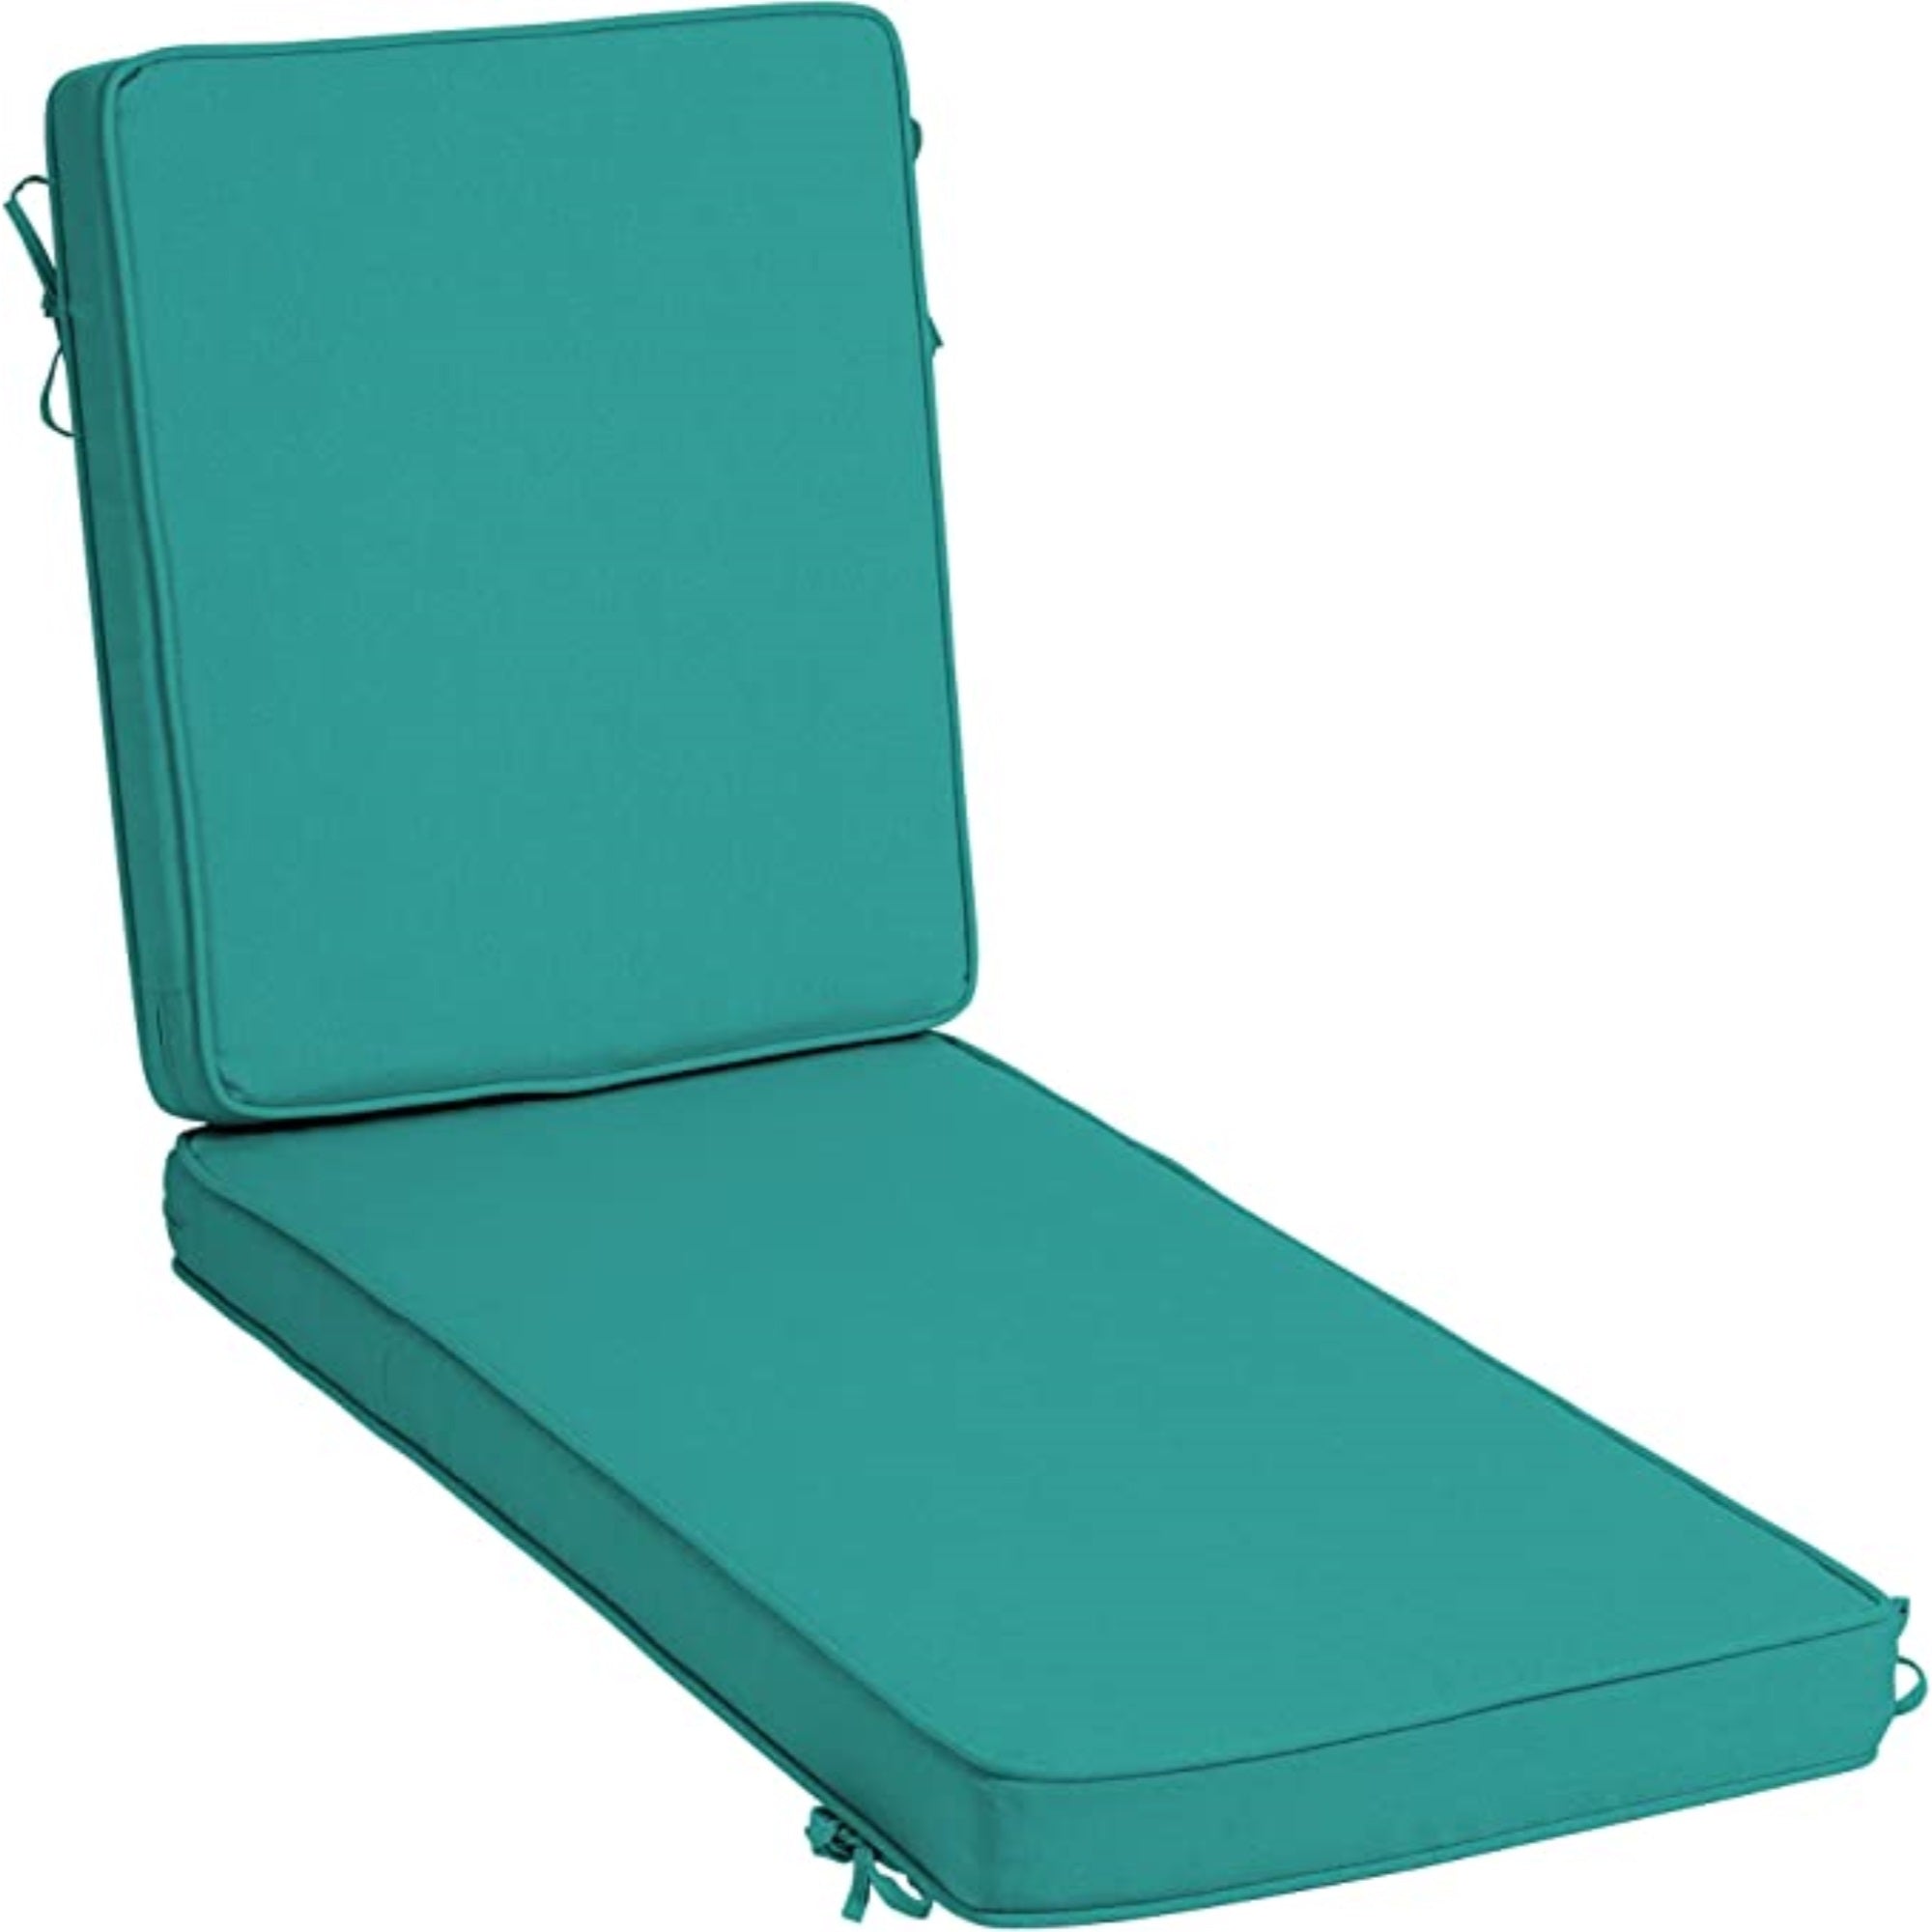 Arden ProFoam EverTru Acrylic Outdoor Chaise Lounge Cushion, 72 x 21 x 3.5"